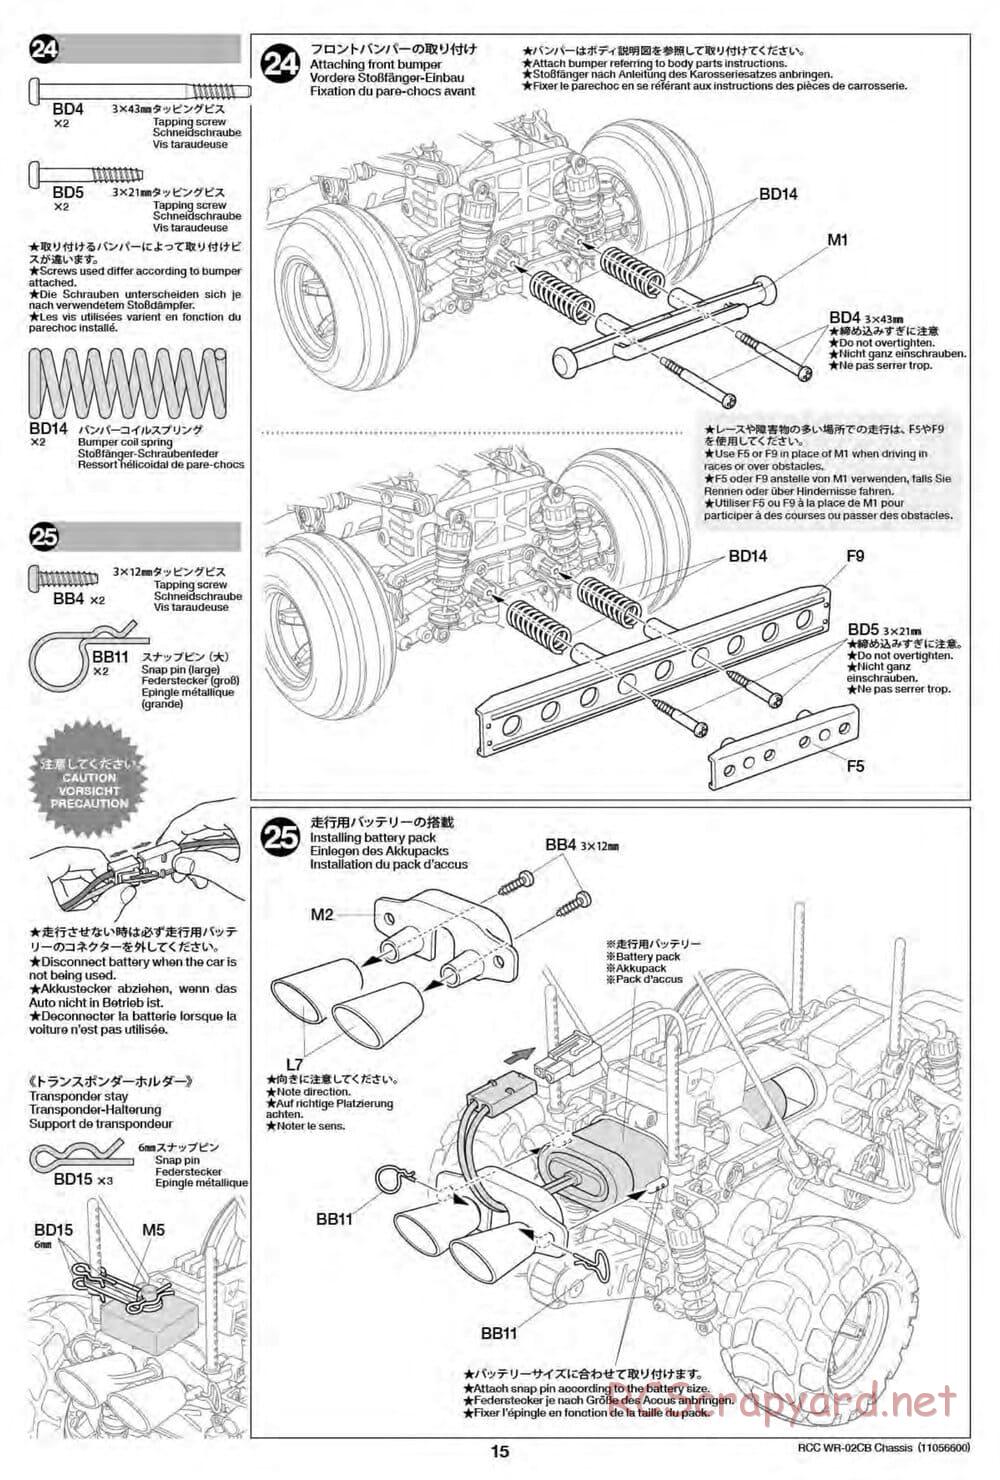 Tamiya - WR-02CB Chassis - Manual - Page 15